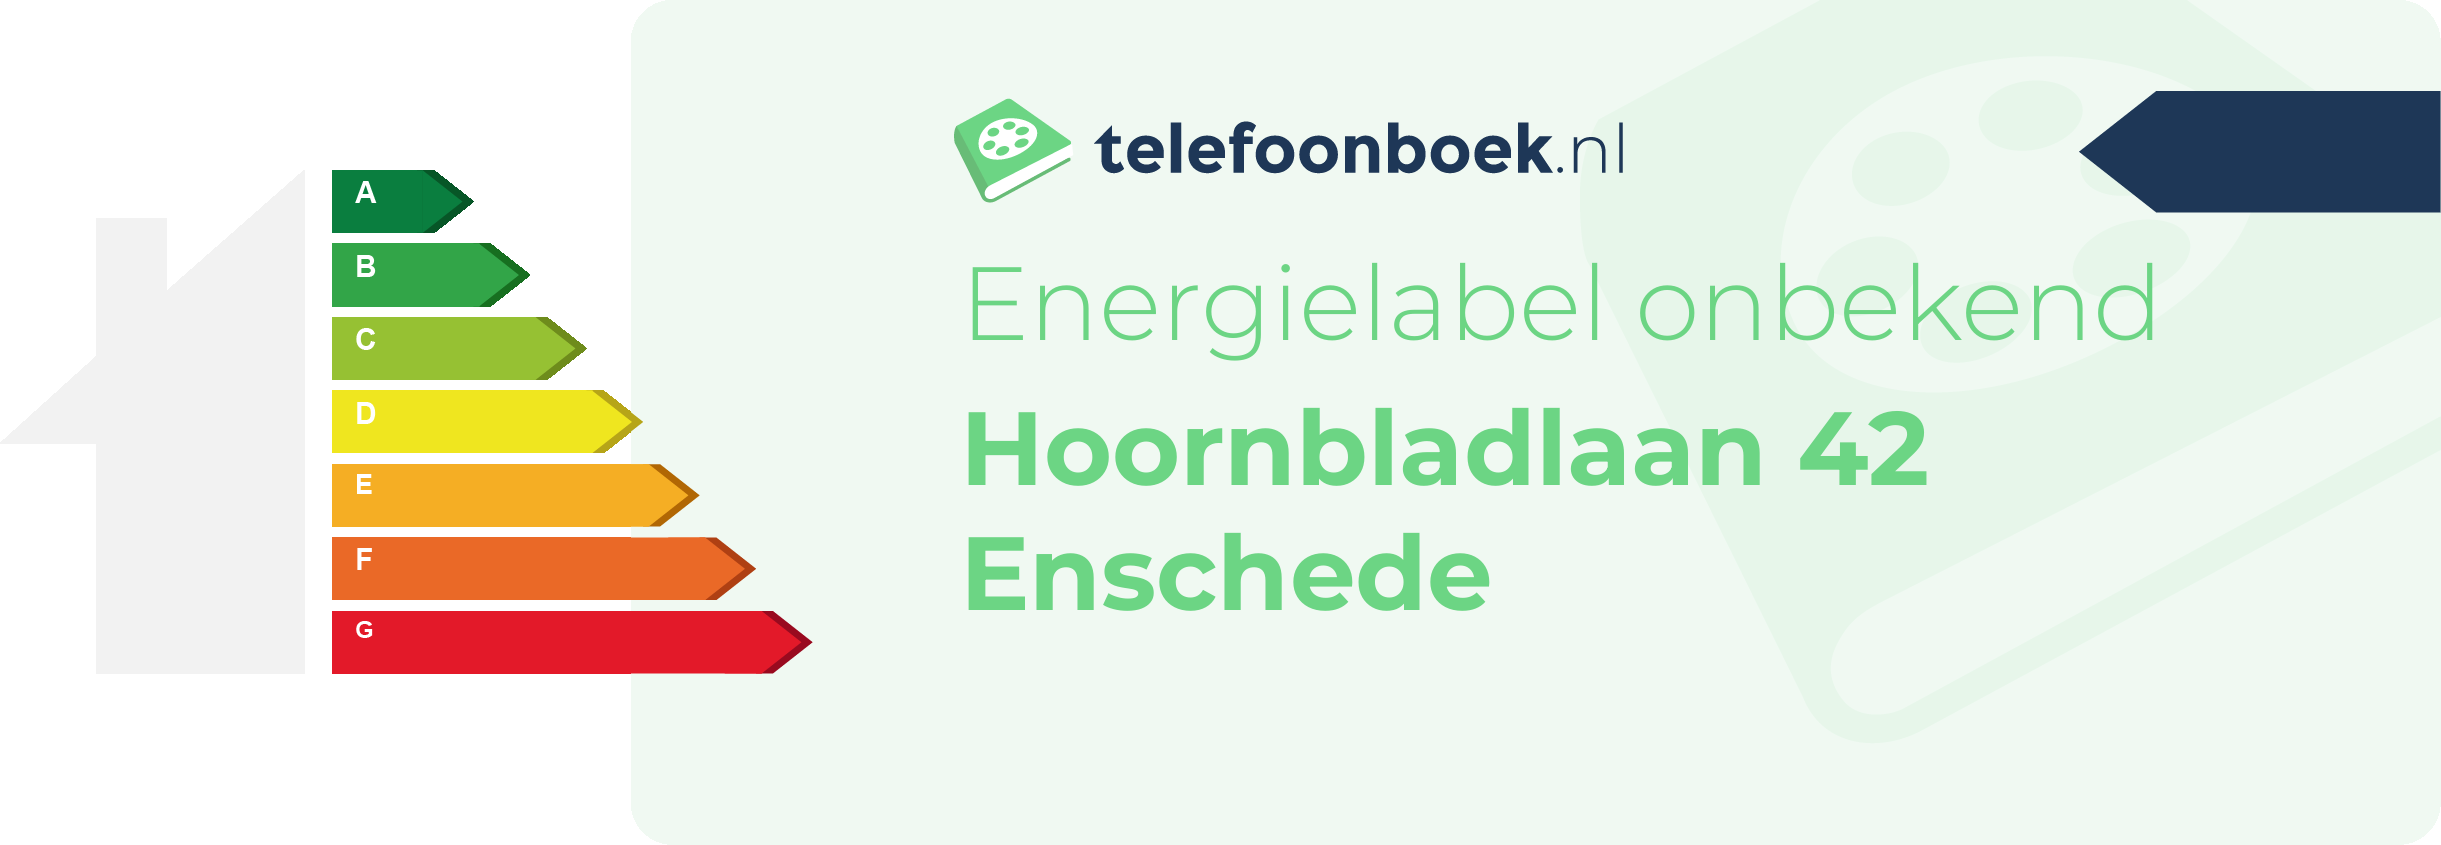 Energielabel Hoornbladlaan 42 Enschede